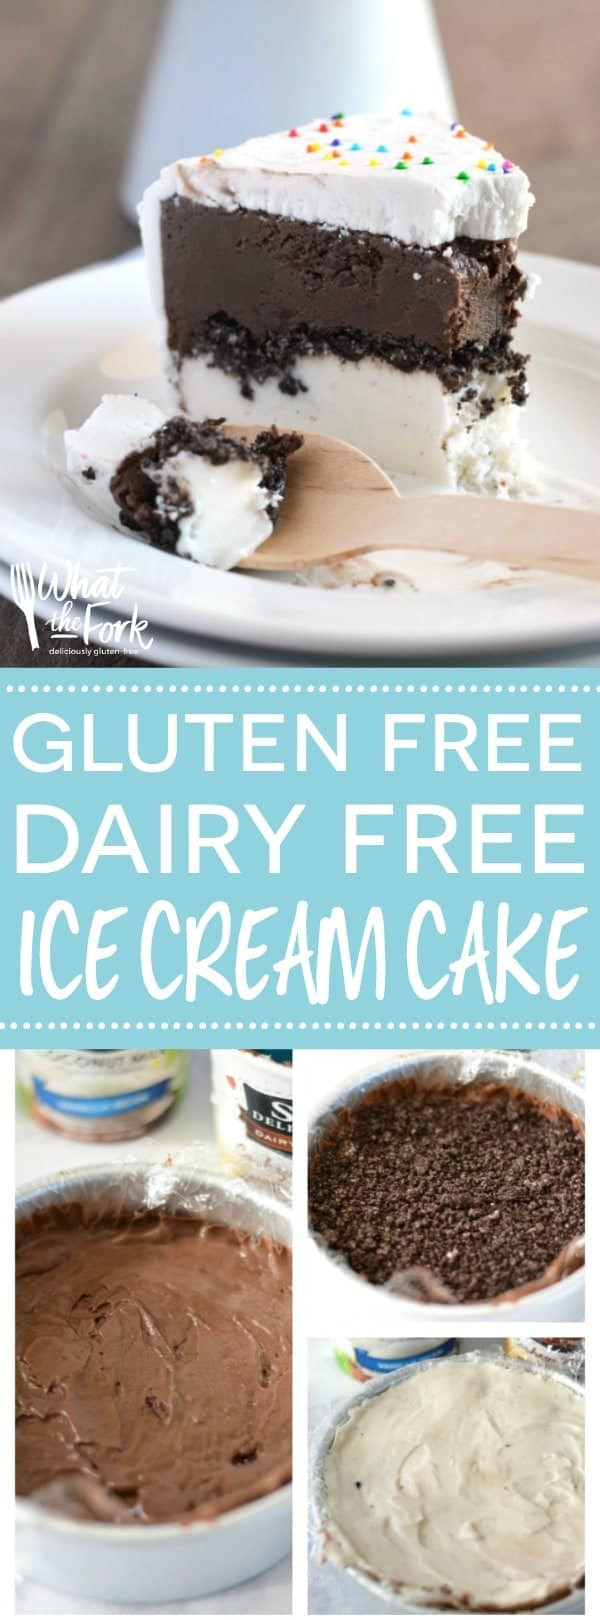 Gluten Free Ice Cream Cake Recipe
 Gluten Free Dairy Free Freezer Cake What the Fork